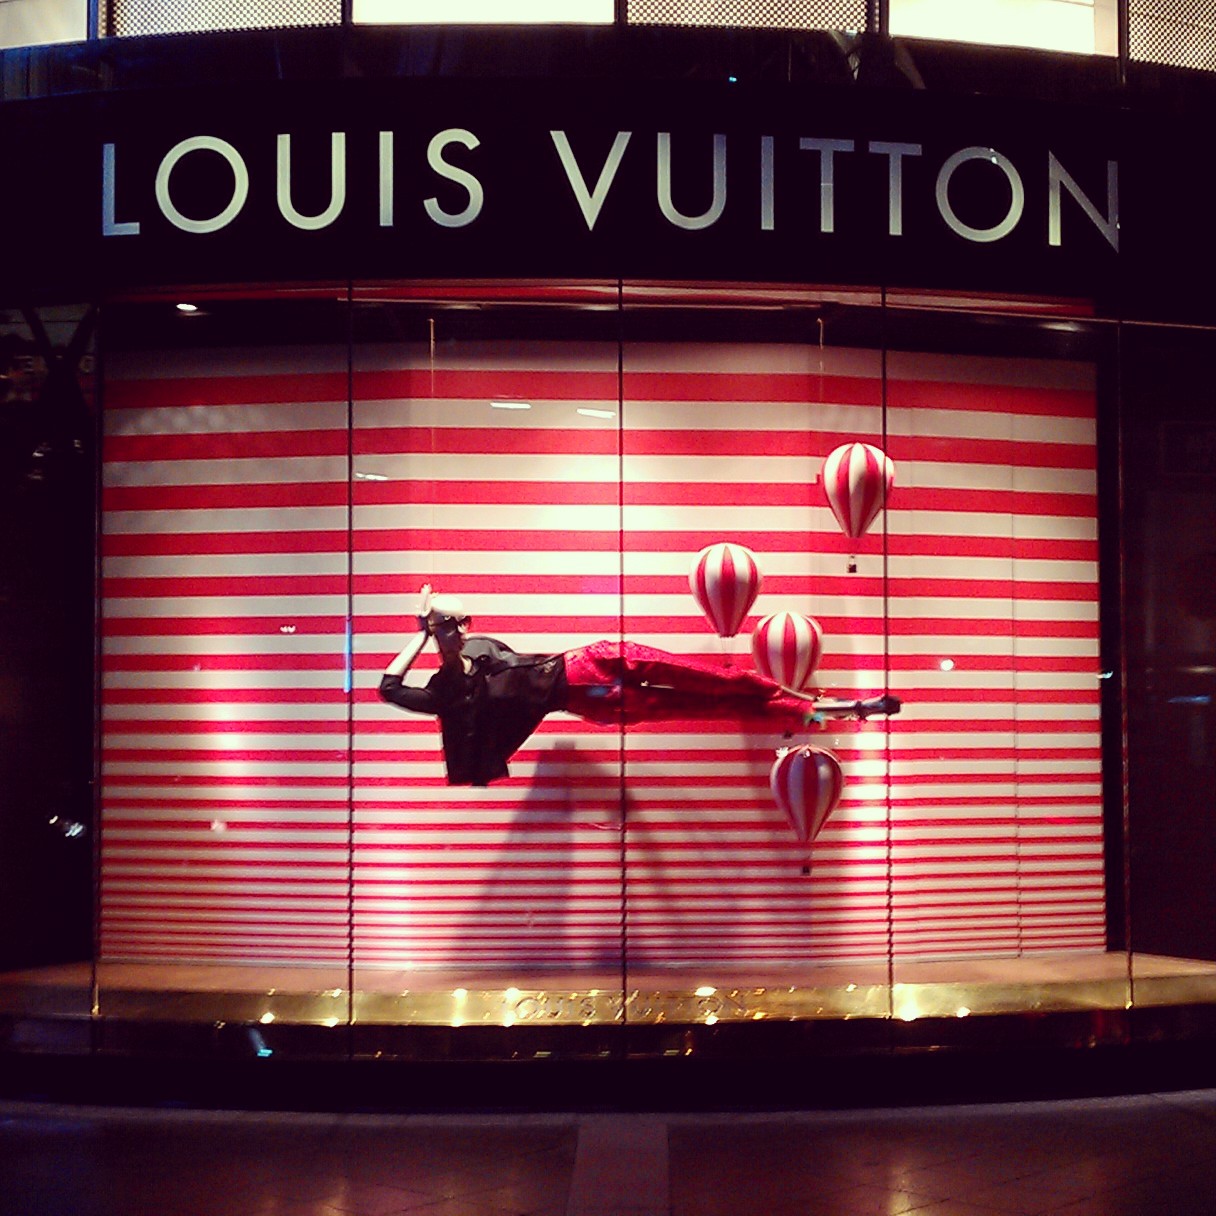 Louis Vuitton Shop King Power Bangkok Stock Photo 1282389928